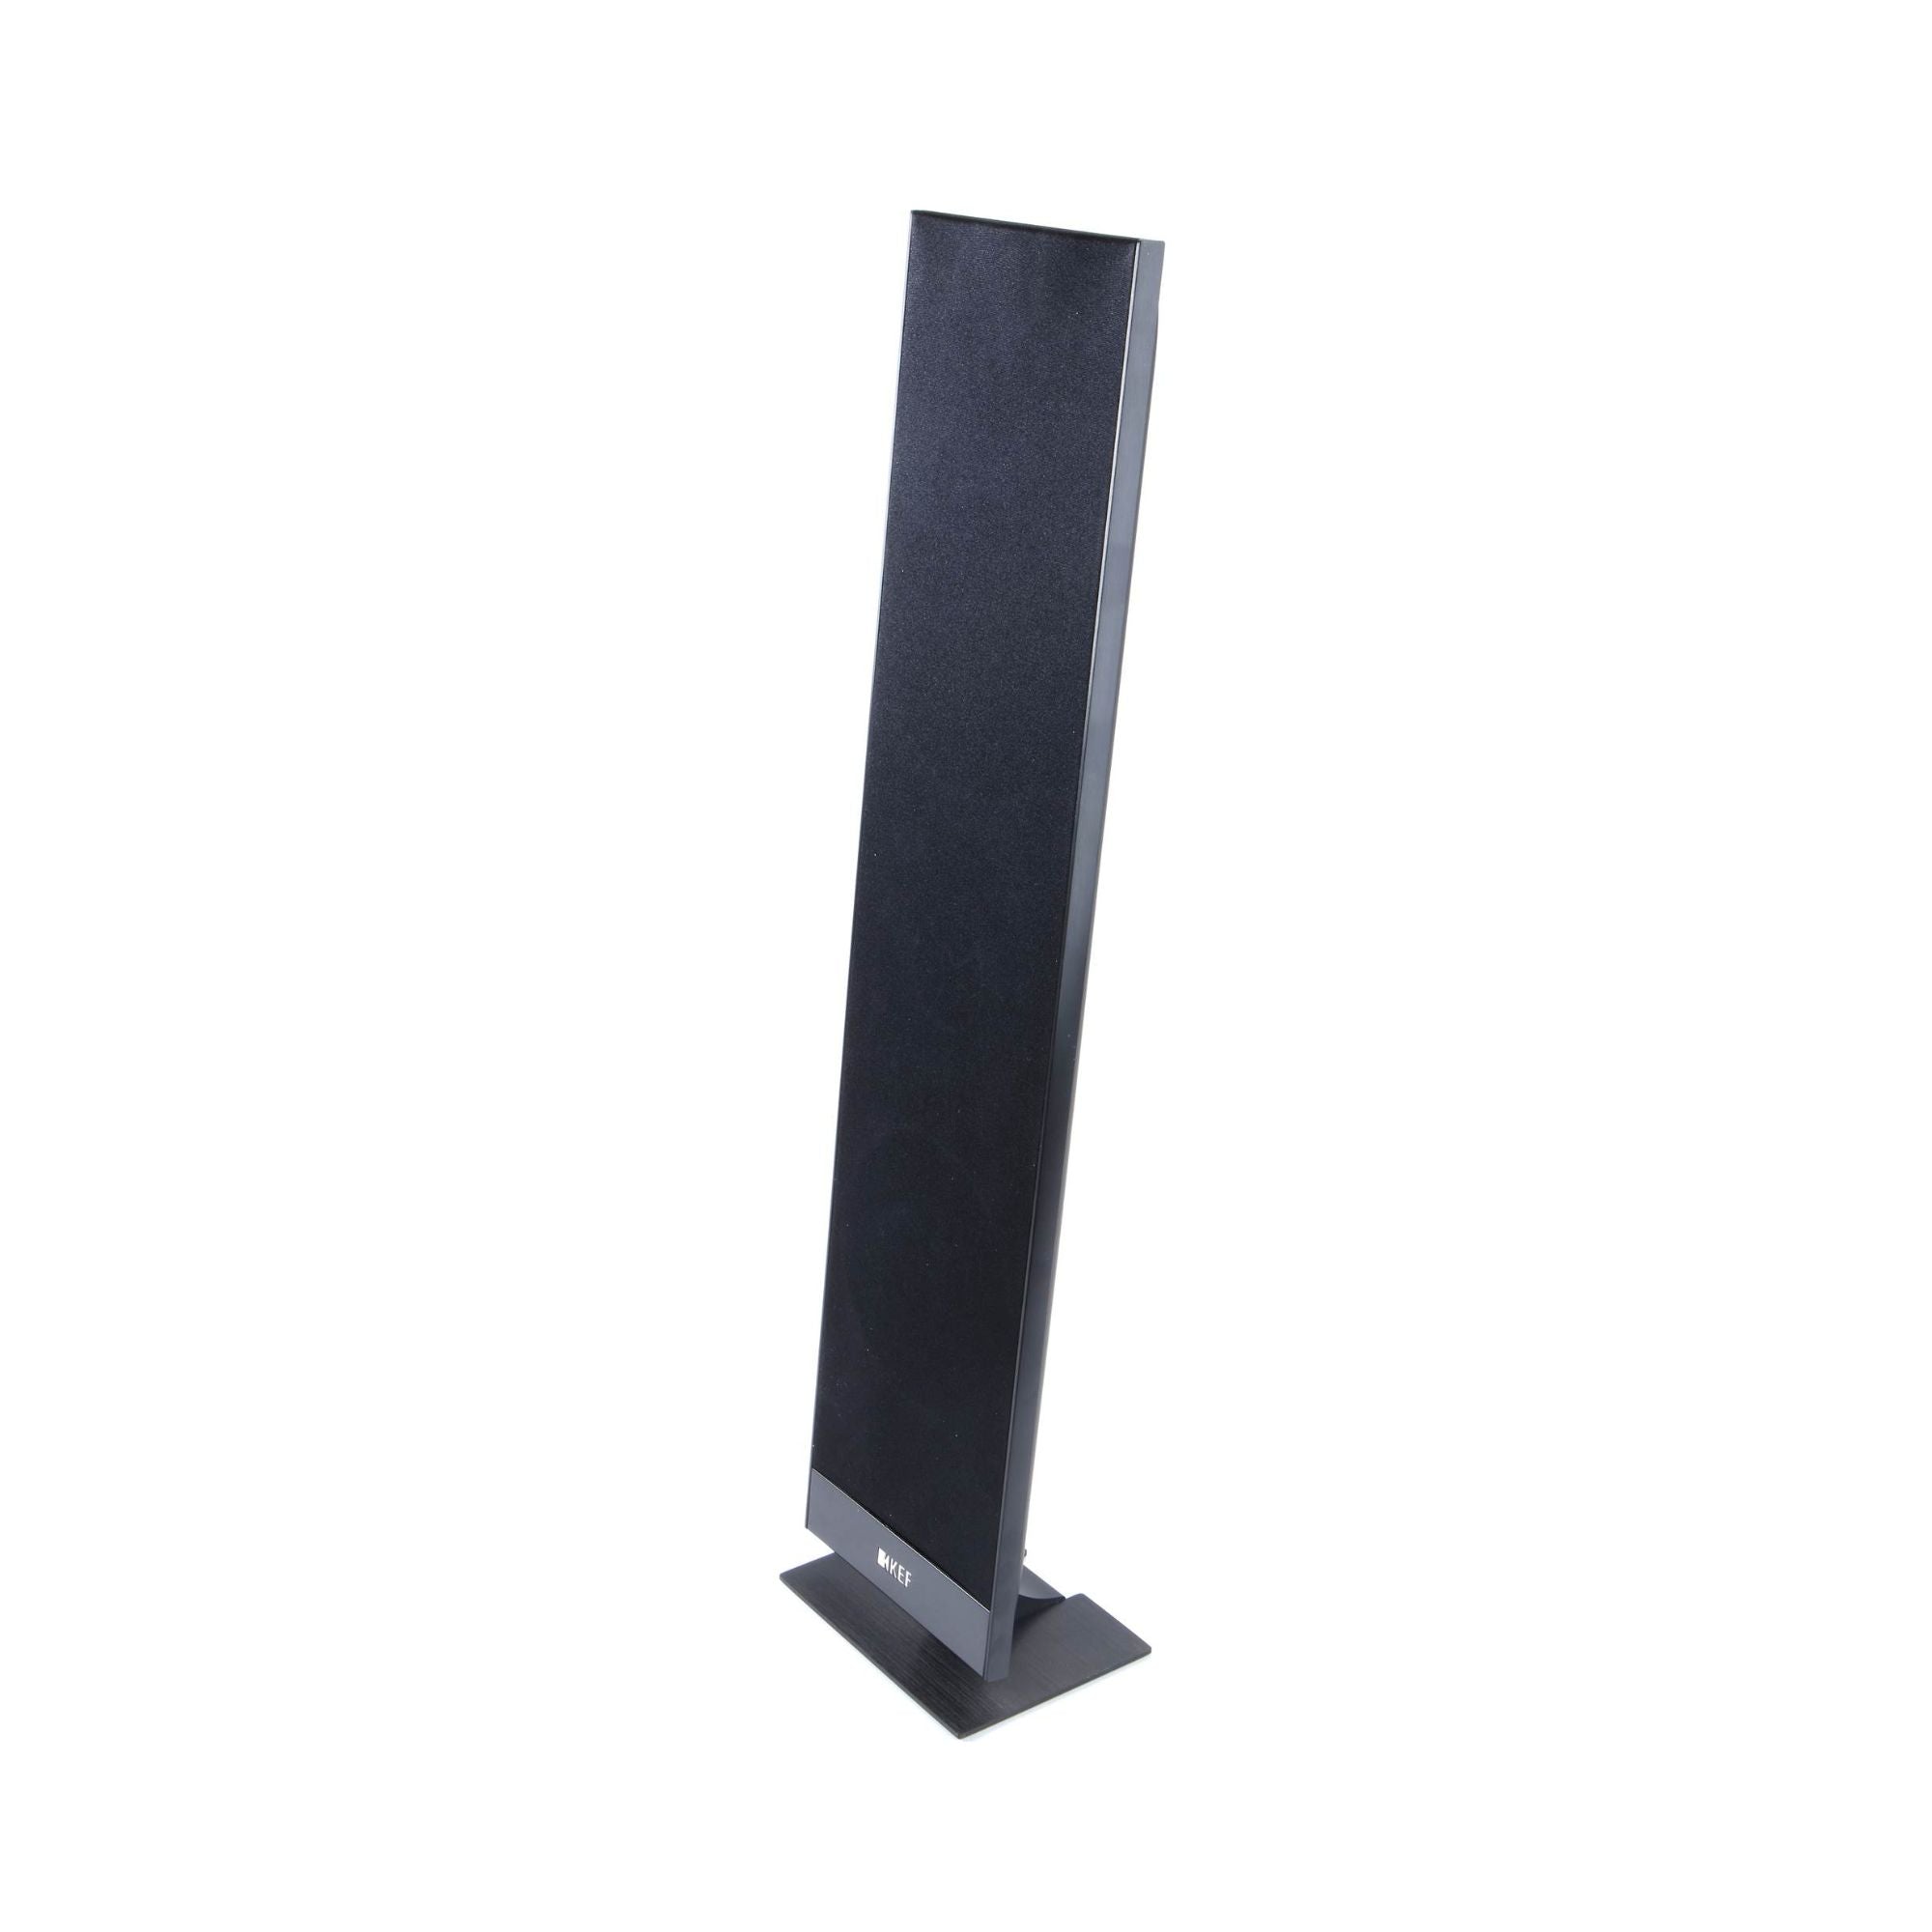 KEF T301 - Ultra-thin wall-Mountable Home Theater Speaker, KEF, Satellite Speaker - AVStore.in